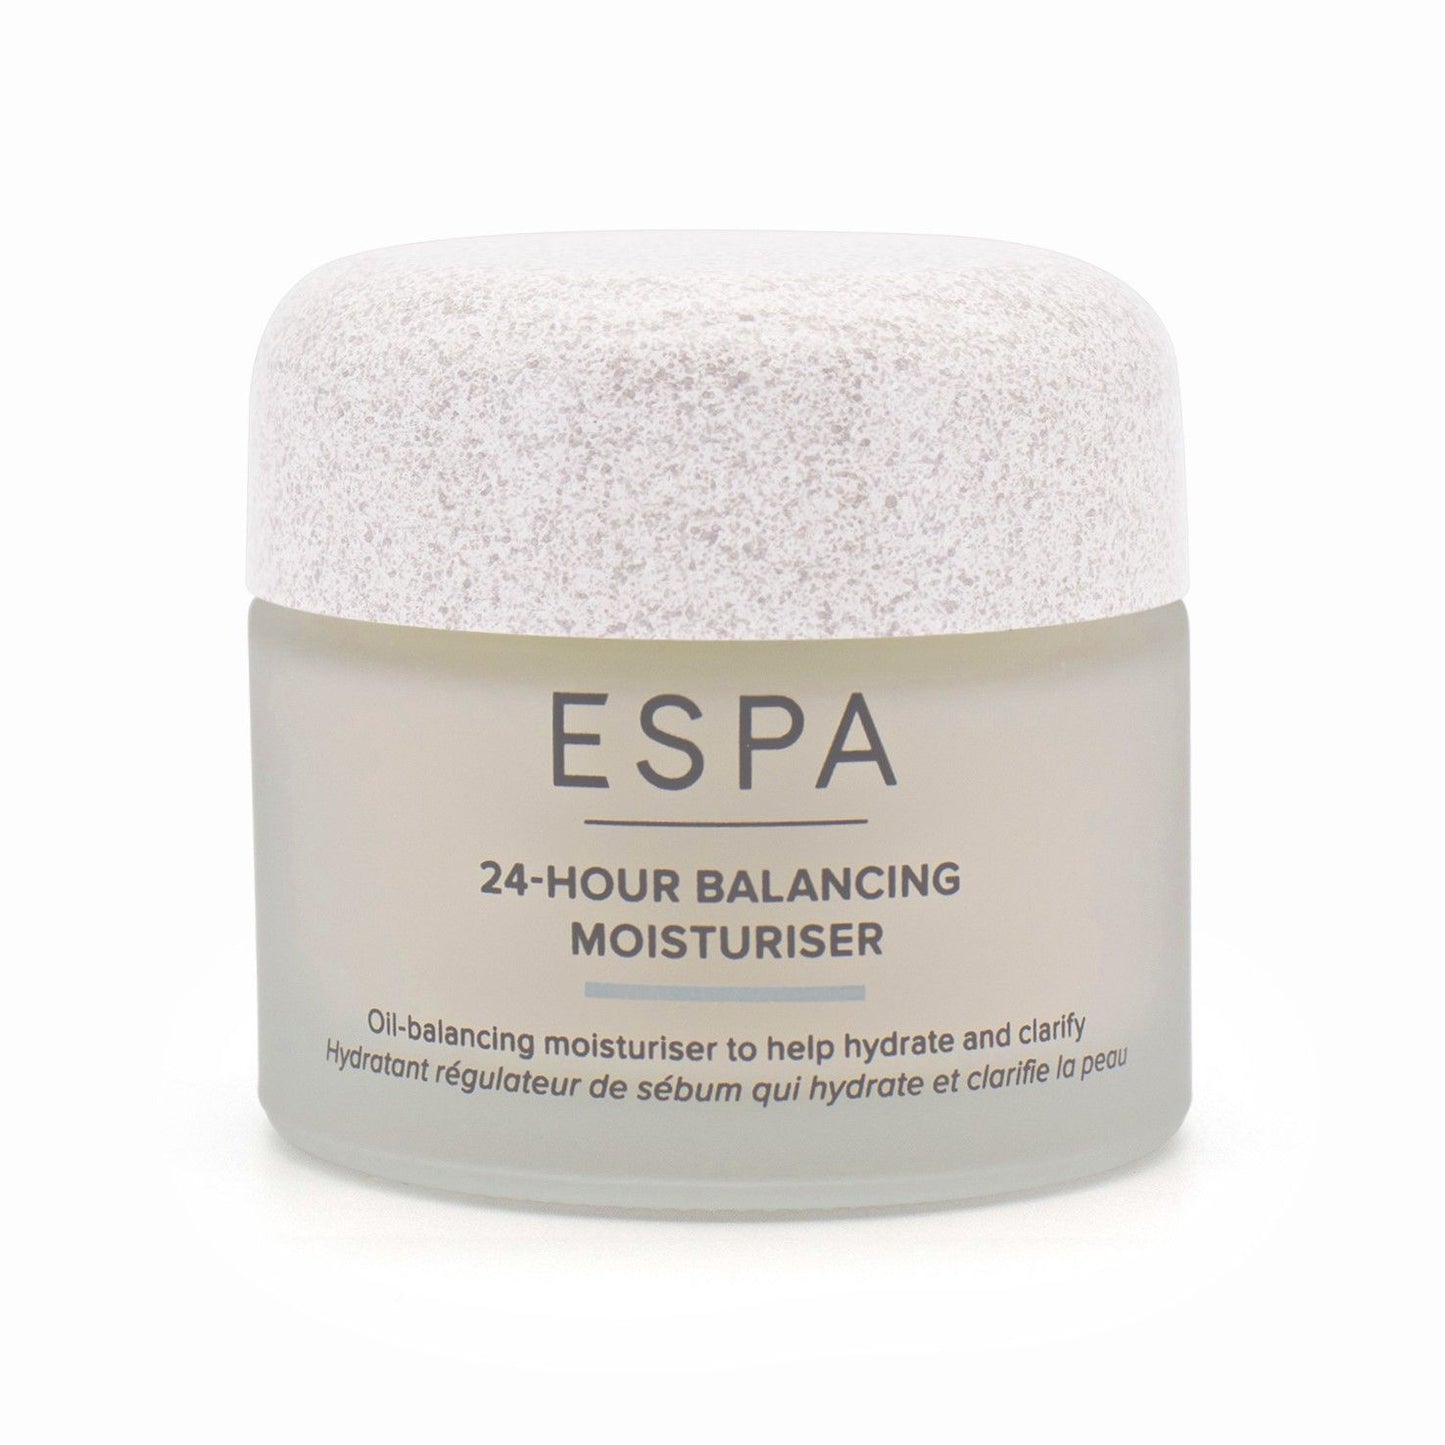 ESPA 24 Hour Balancing Moisturiser Oily/Combination Skin 55ml - Imperfect Box